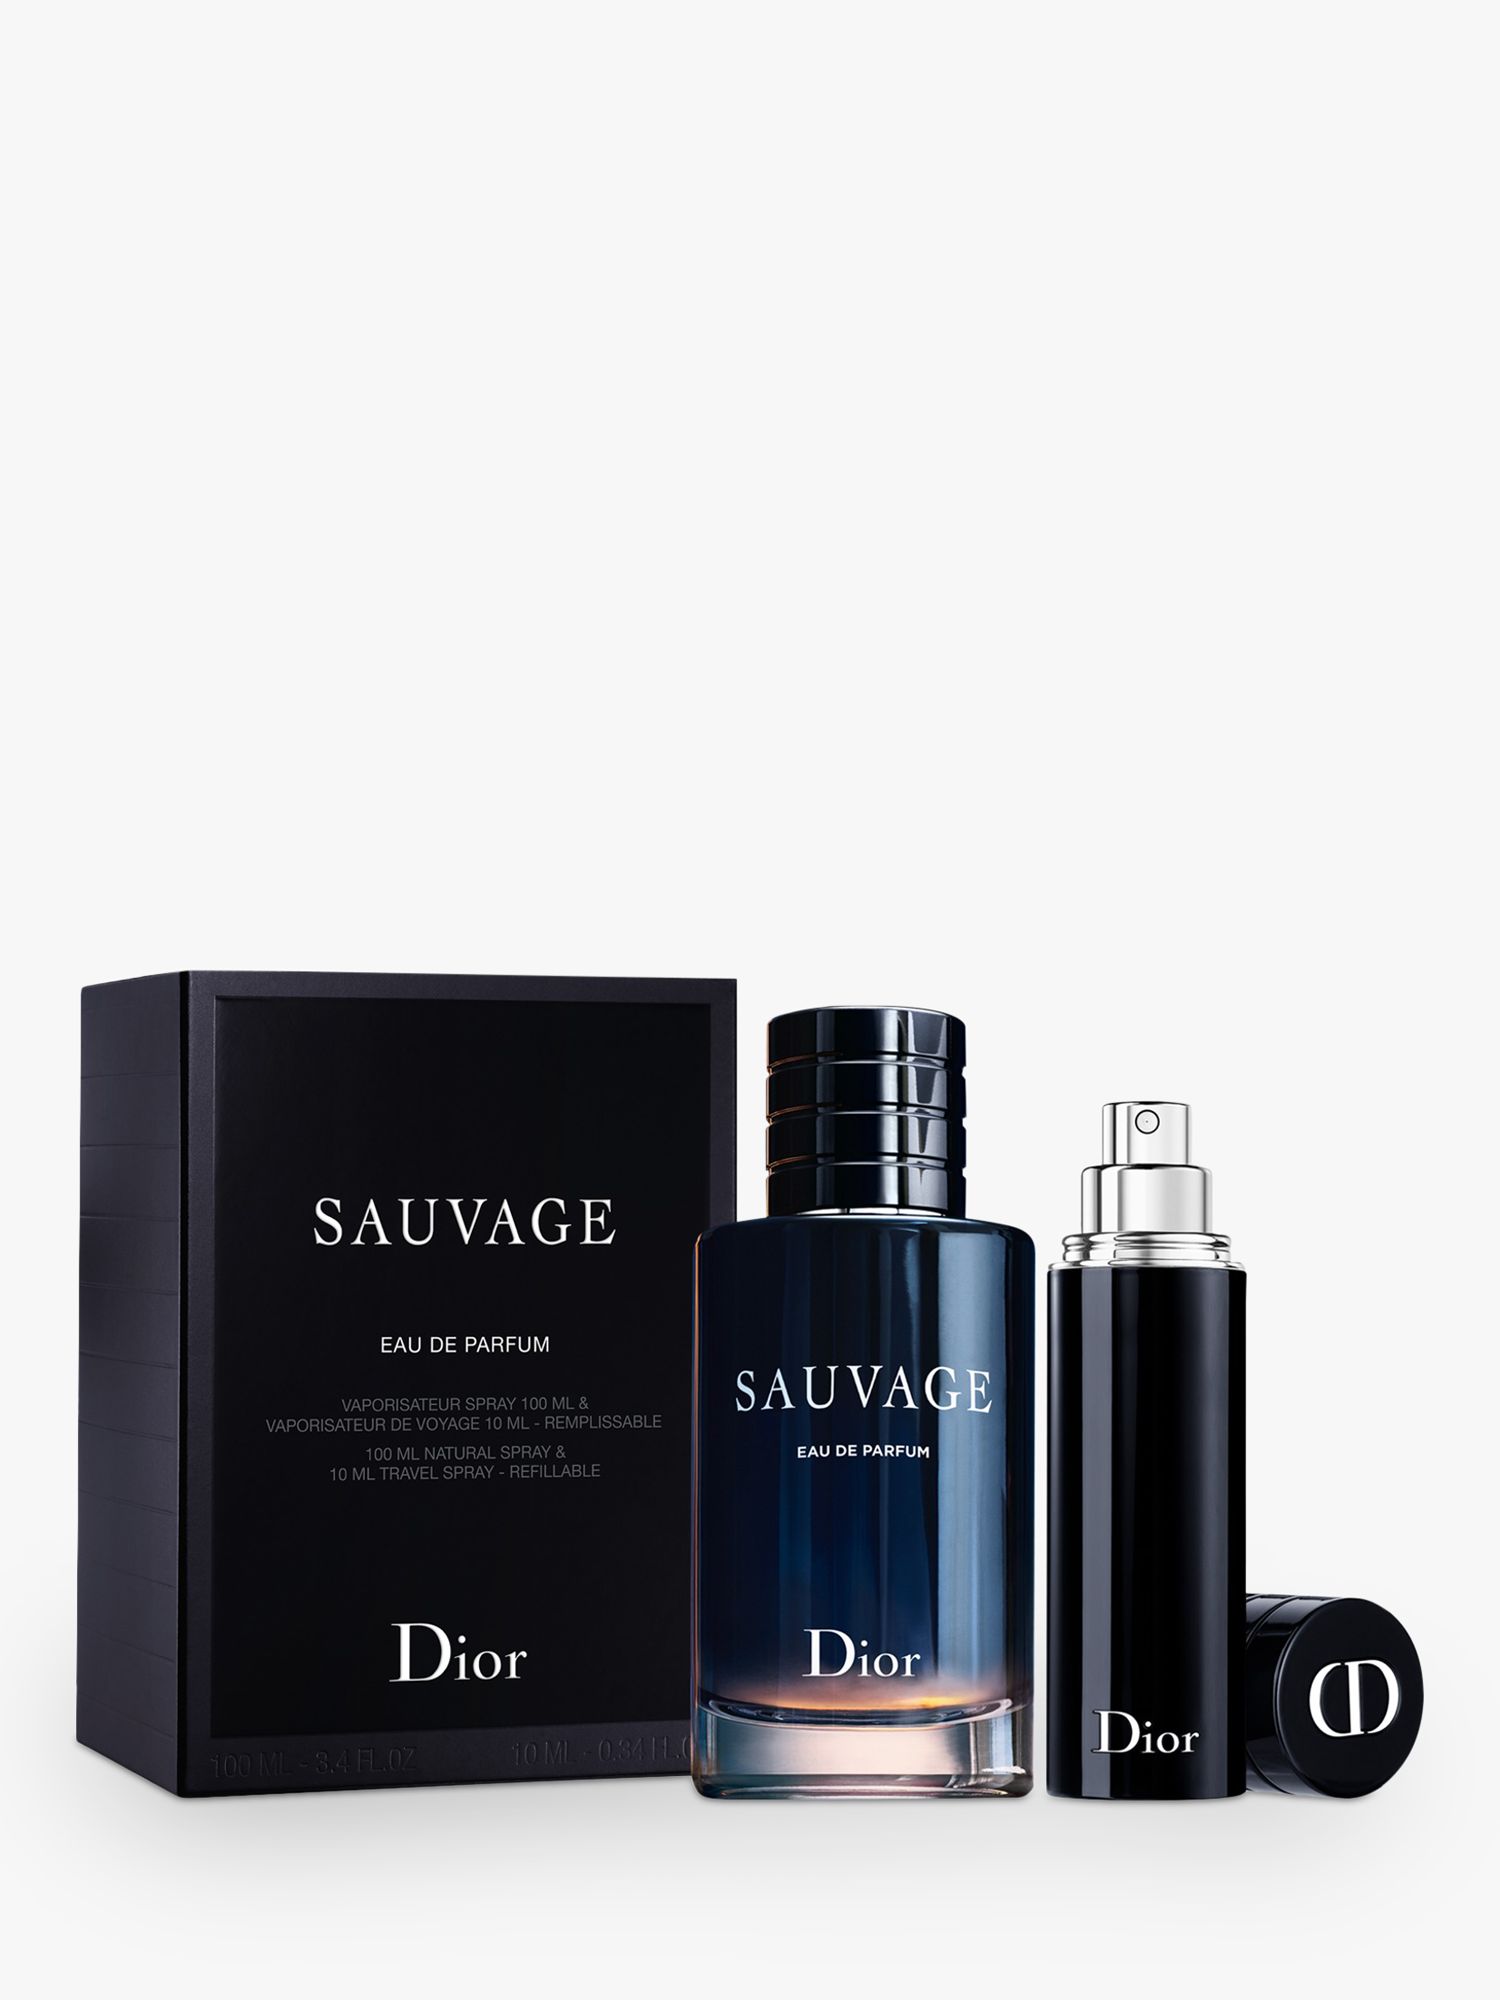 dior sauvage free gift